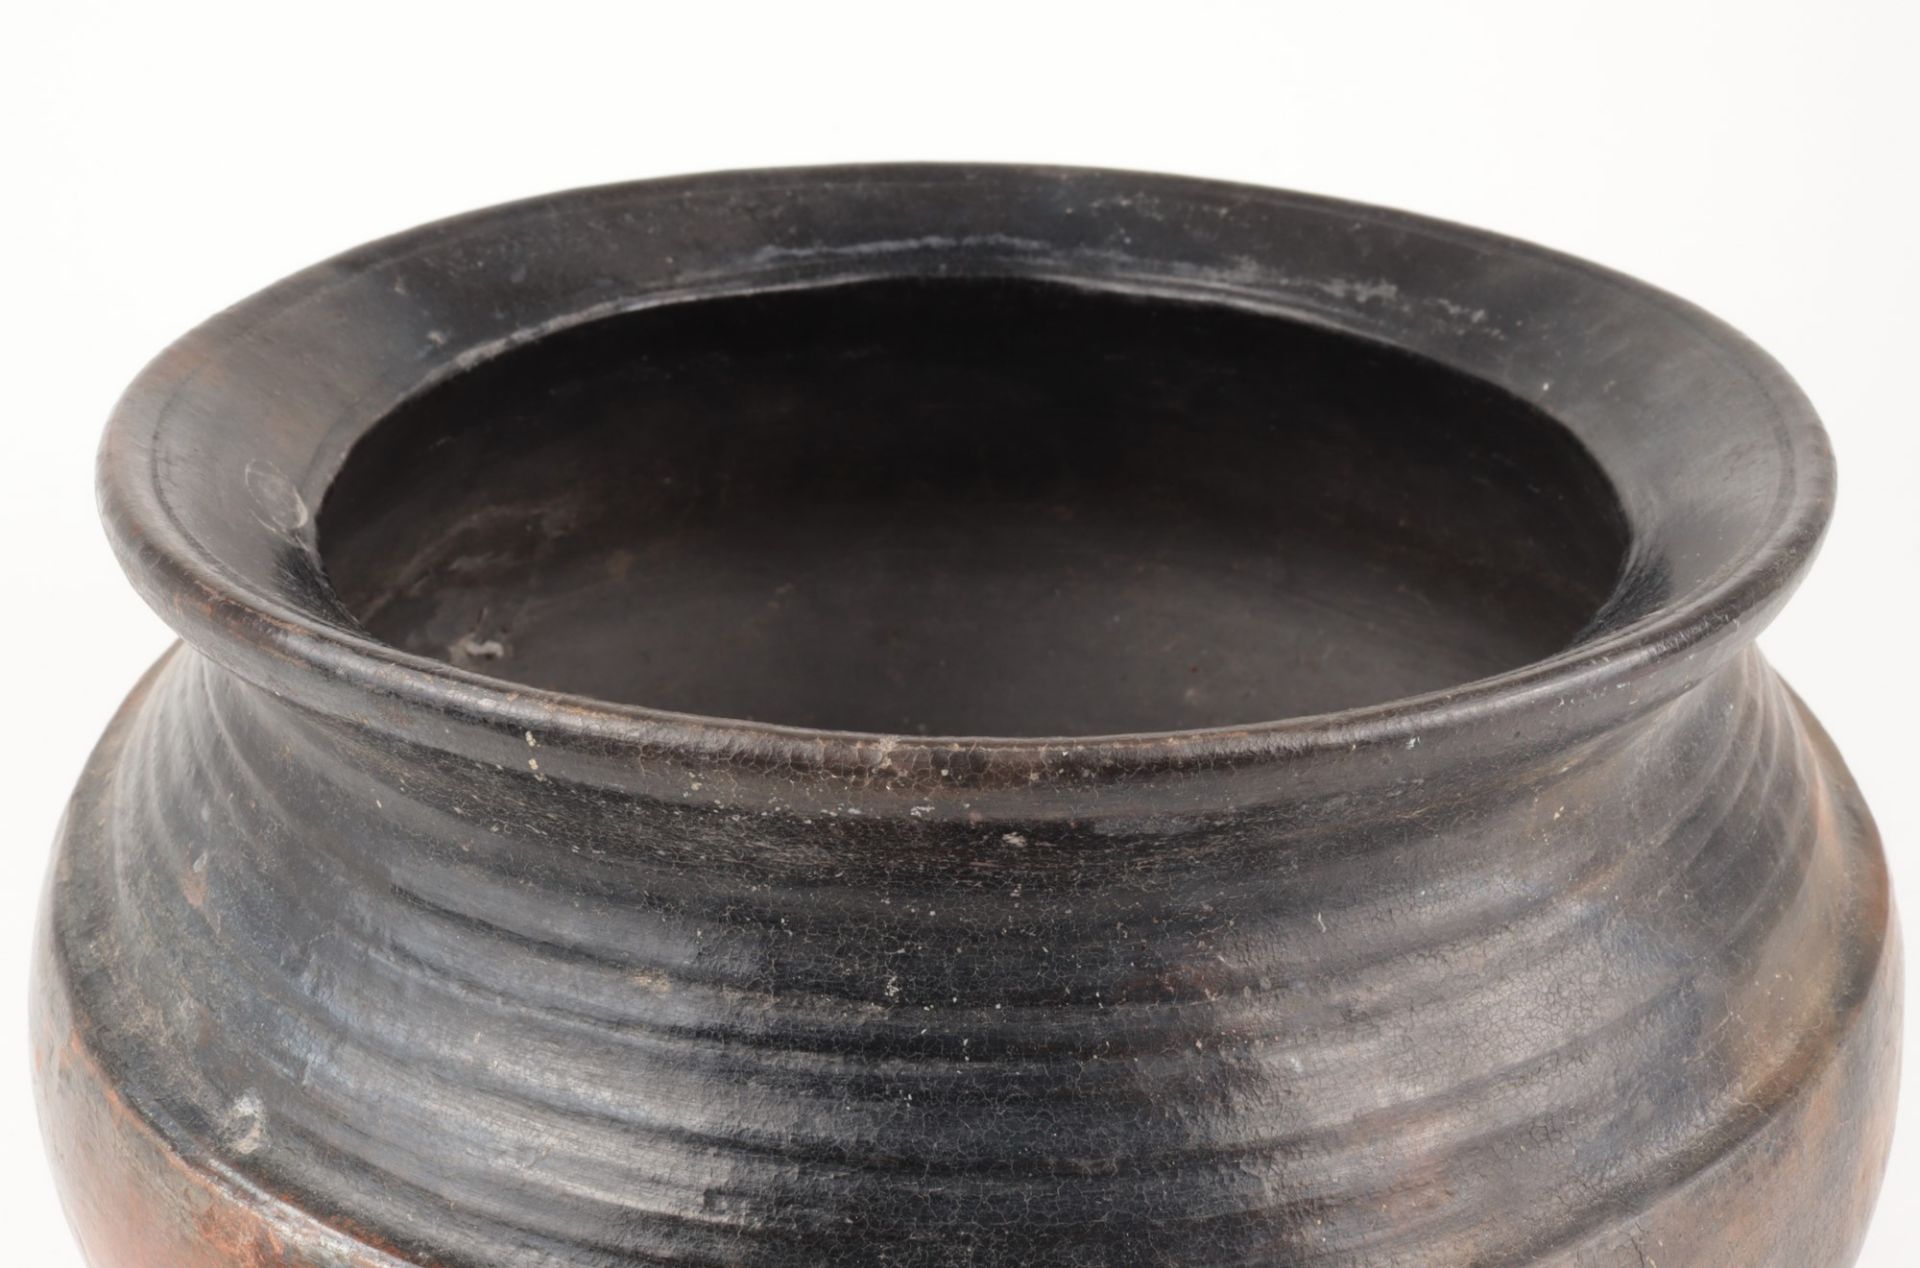 Afrika - Vorratstopf Keramik, rund, halbkugeliger Stand, gedrückte bauchiger Korpus, eingezogener - Image 2 of 4